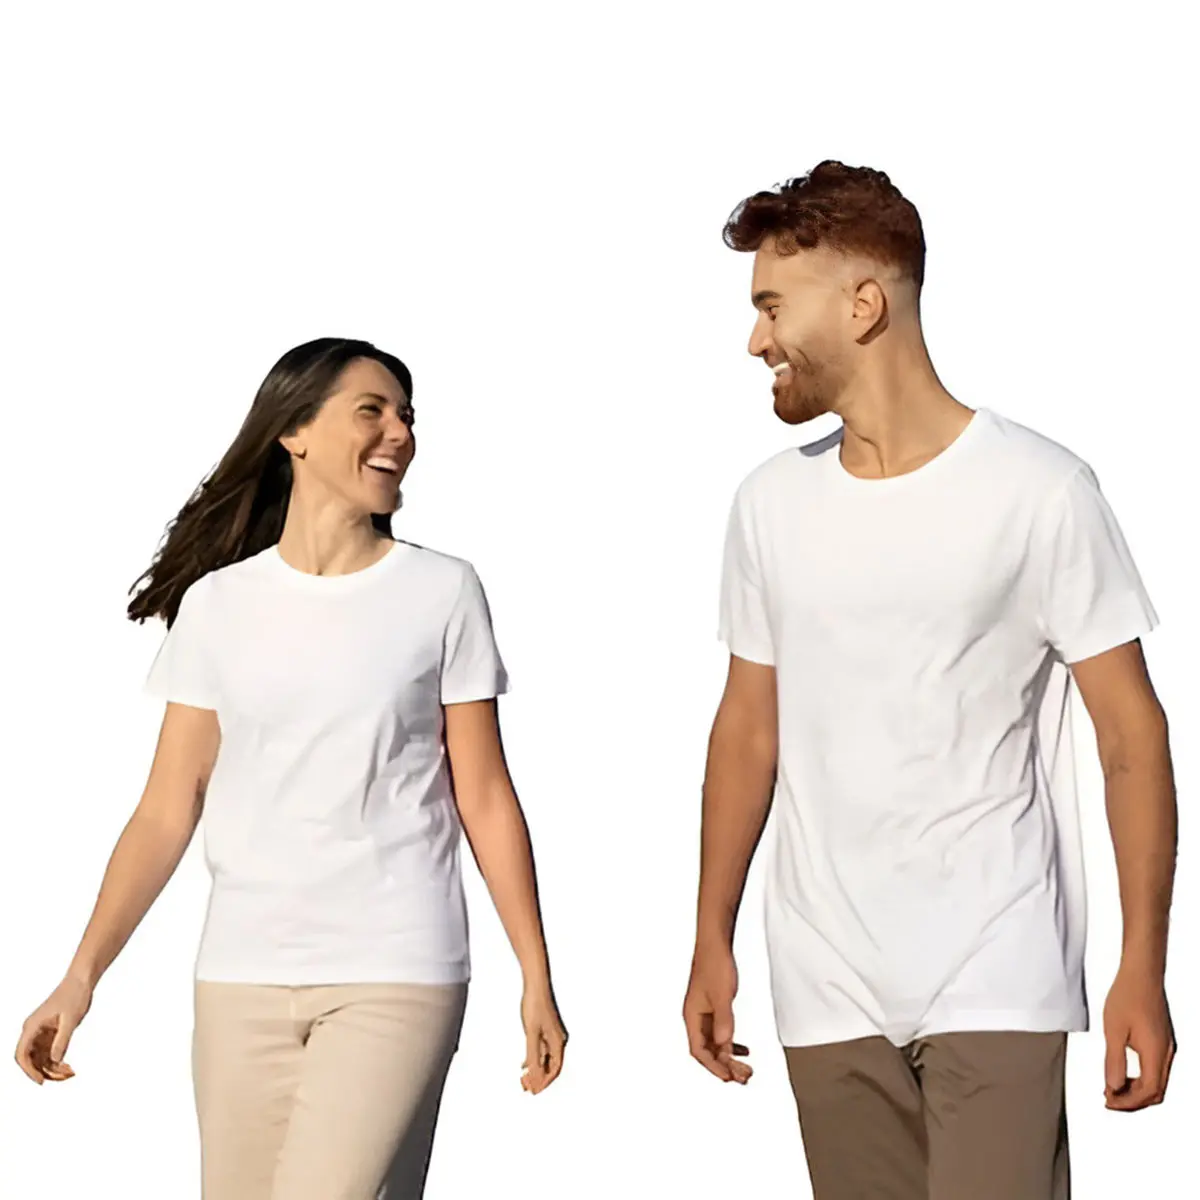 Men's And Women's T-shirts